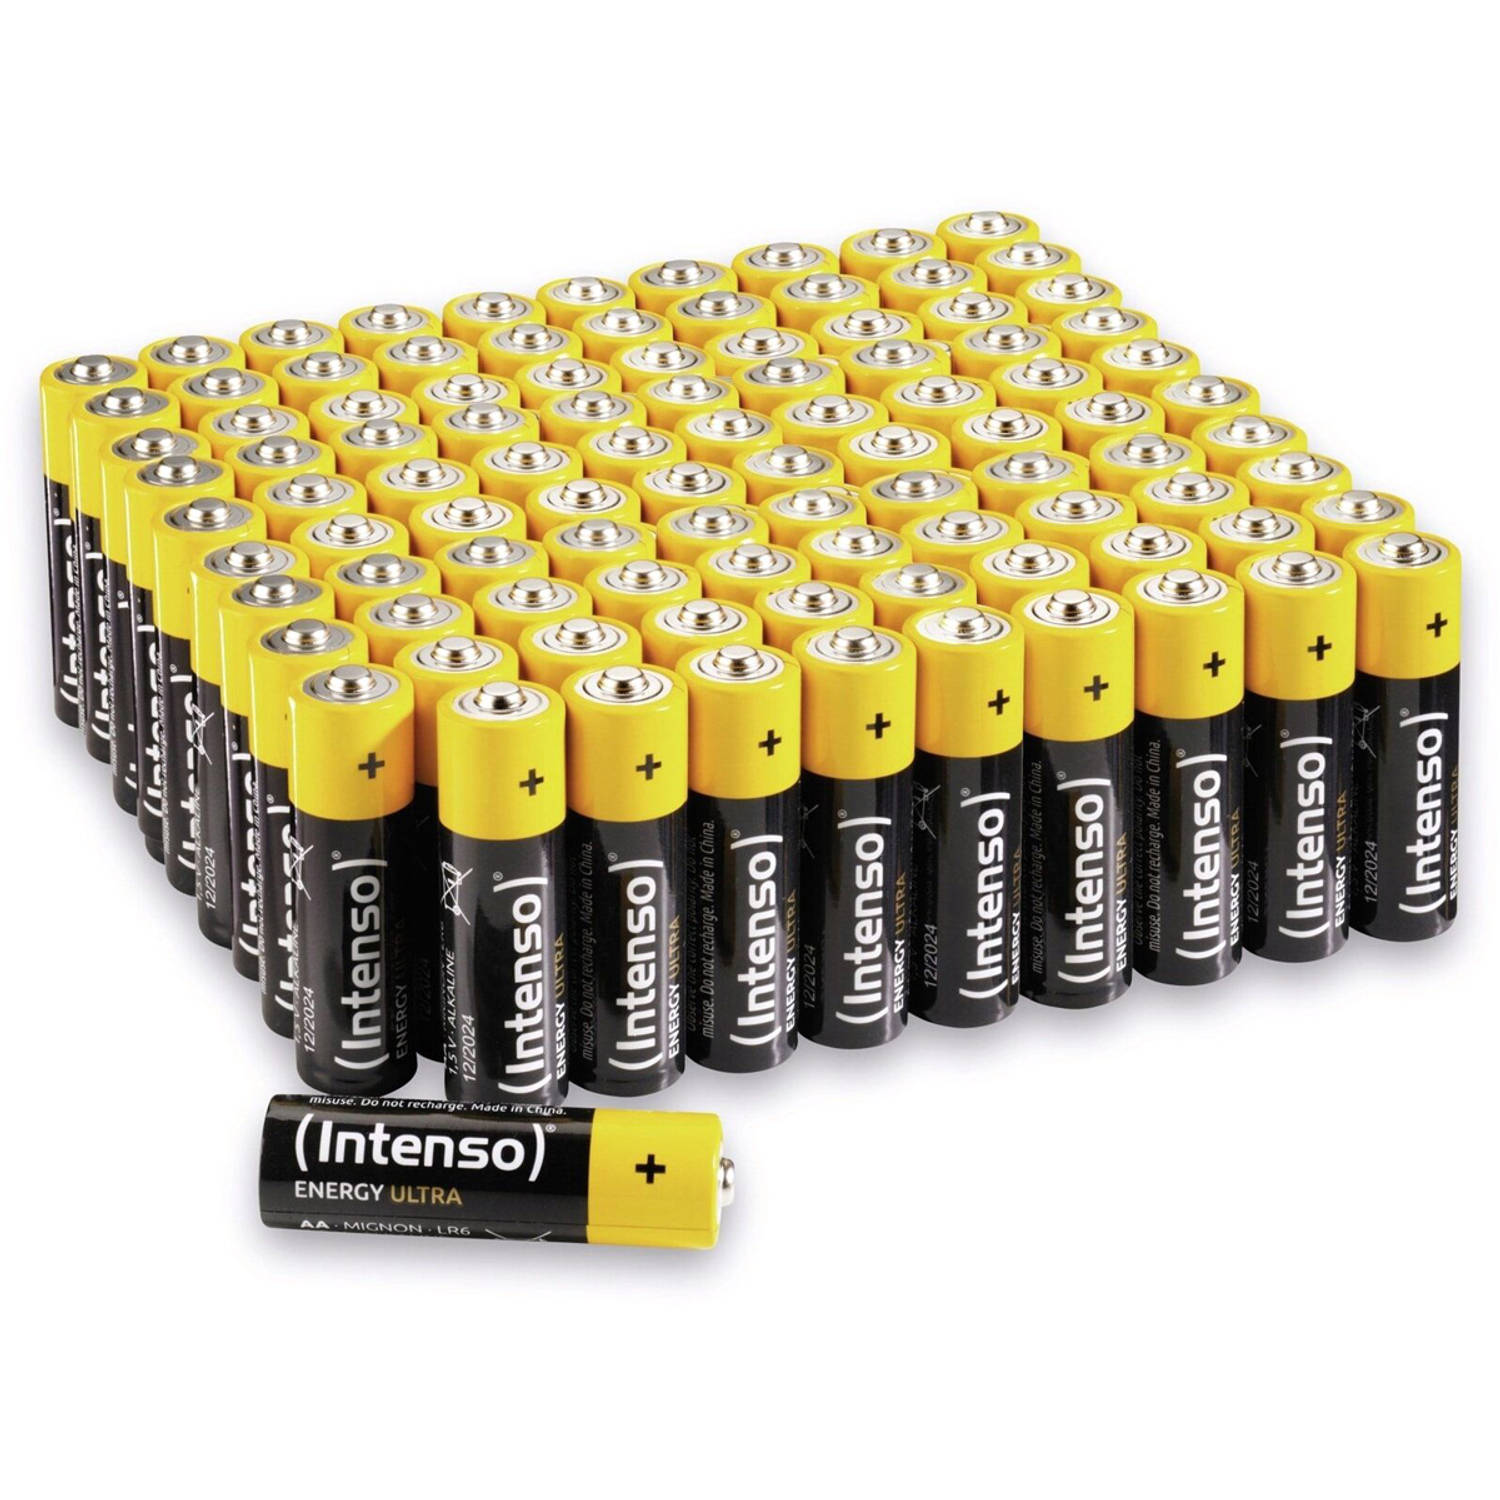 (Intenso) Energy Ultra batterijen AA / LR06 - 100 Megapack (7501920MP)